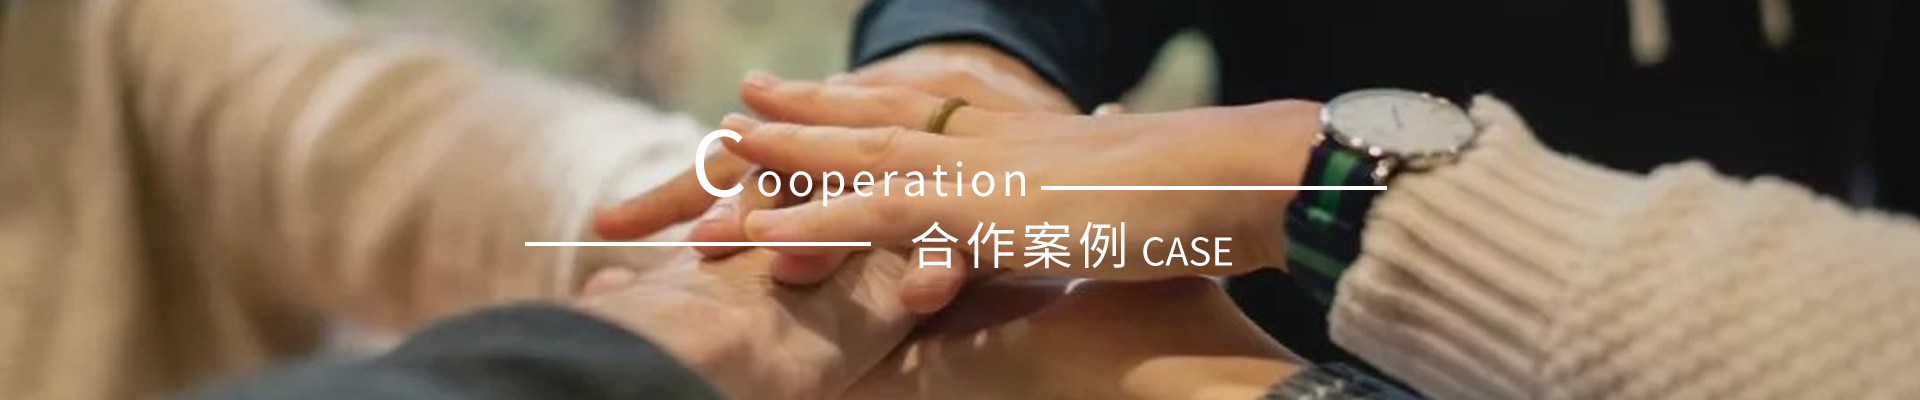 Customer cooperation